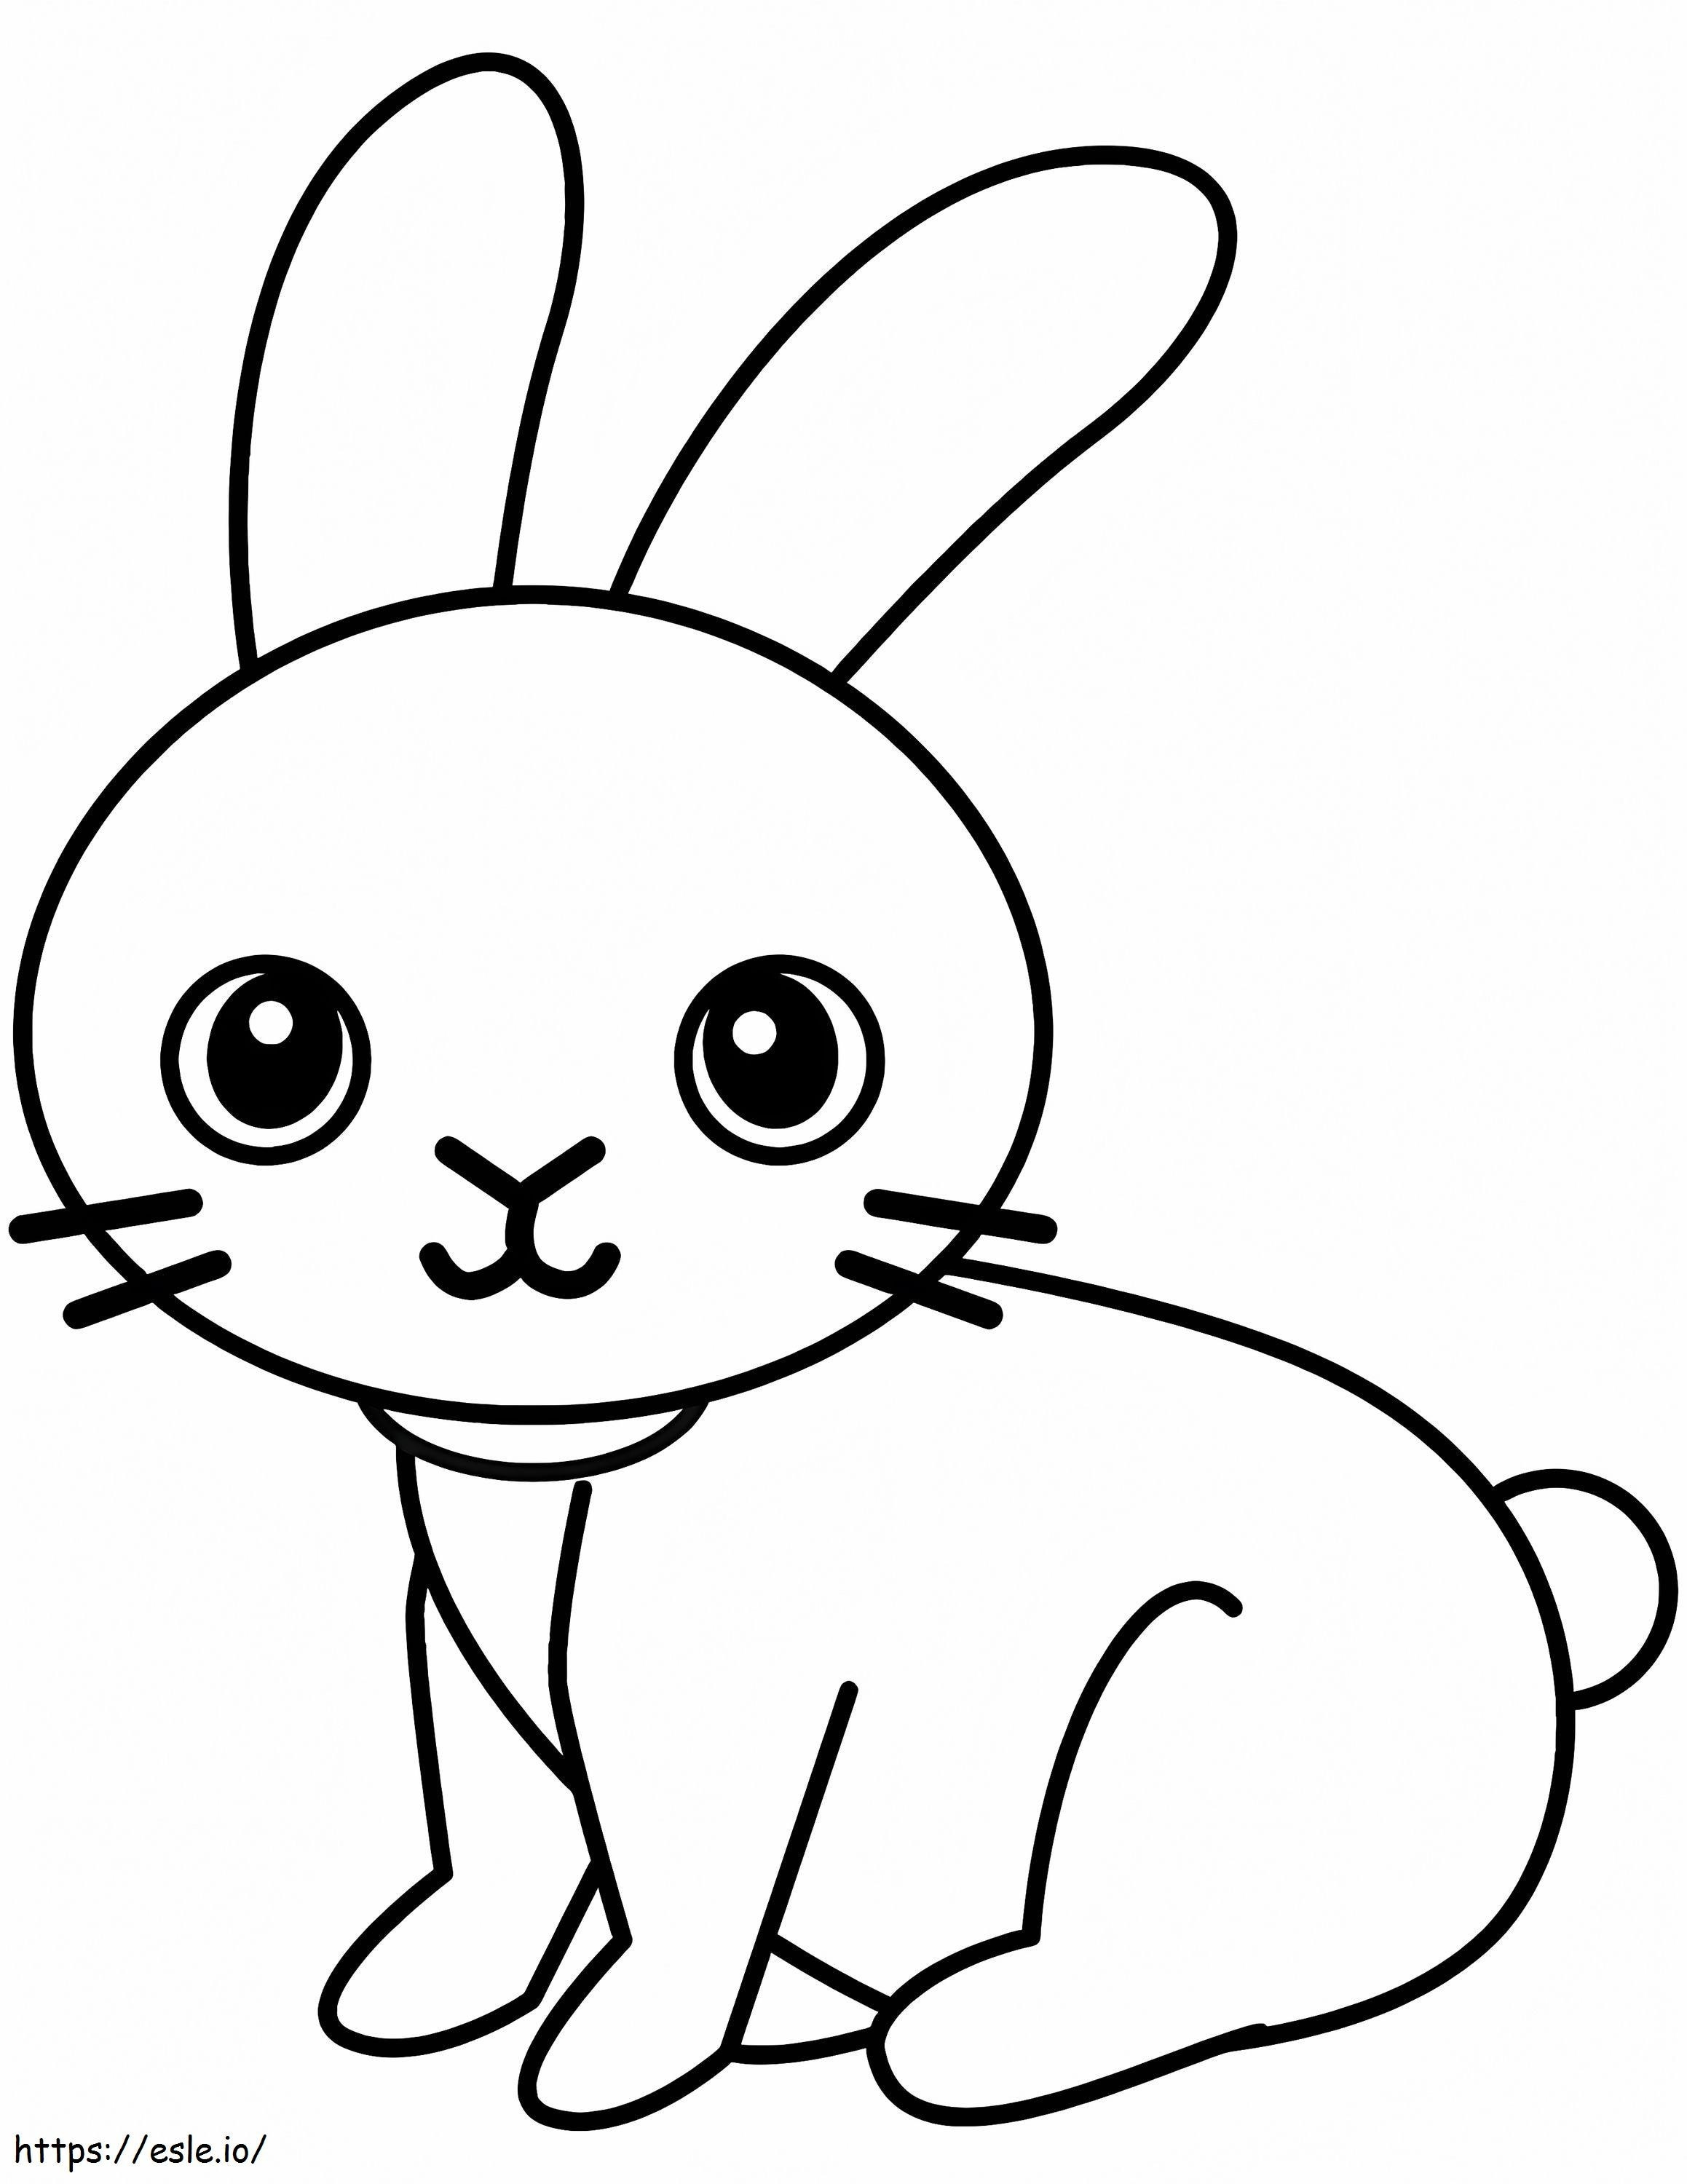 Adorable Little Rabbit coloring page